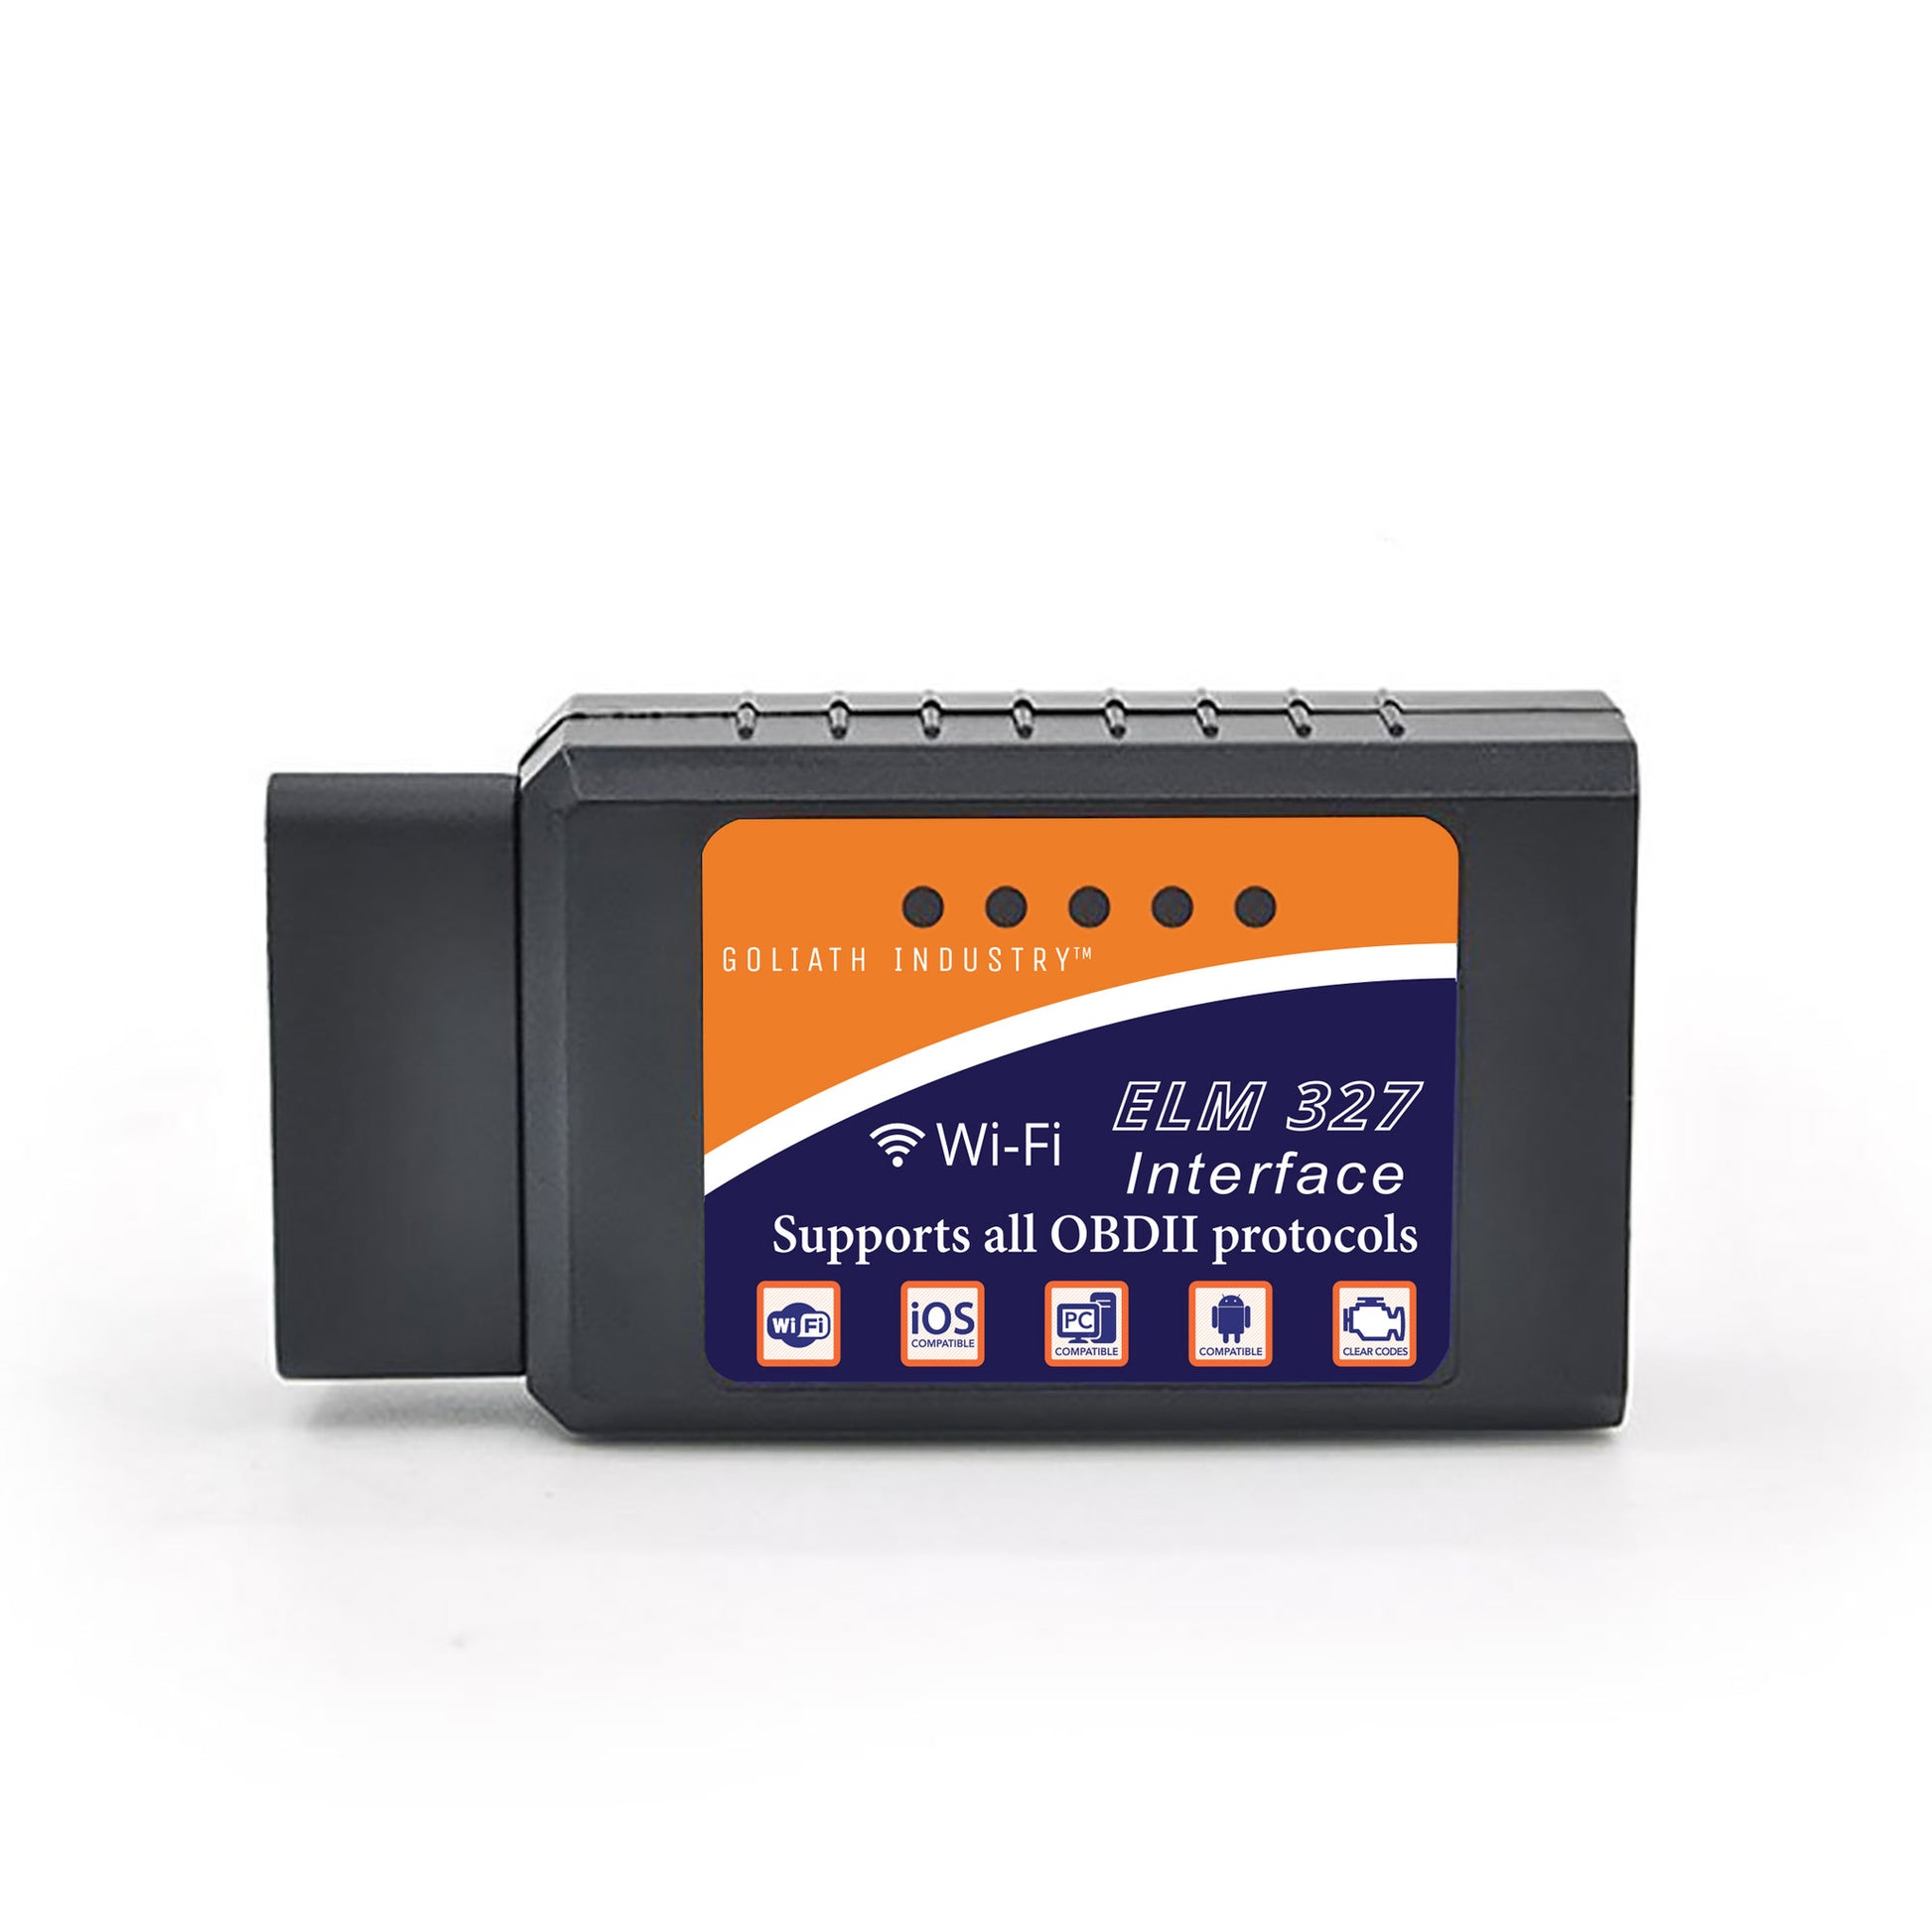 KOBRA Wireless OBD2 Car Code Reader Scan Tool OBD Scanner Connects Via –  kobraproducts